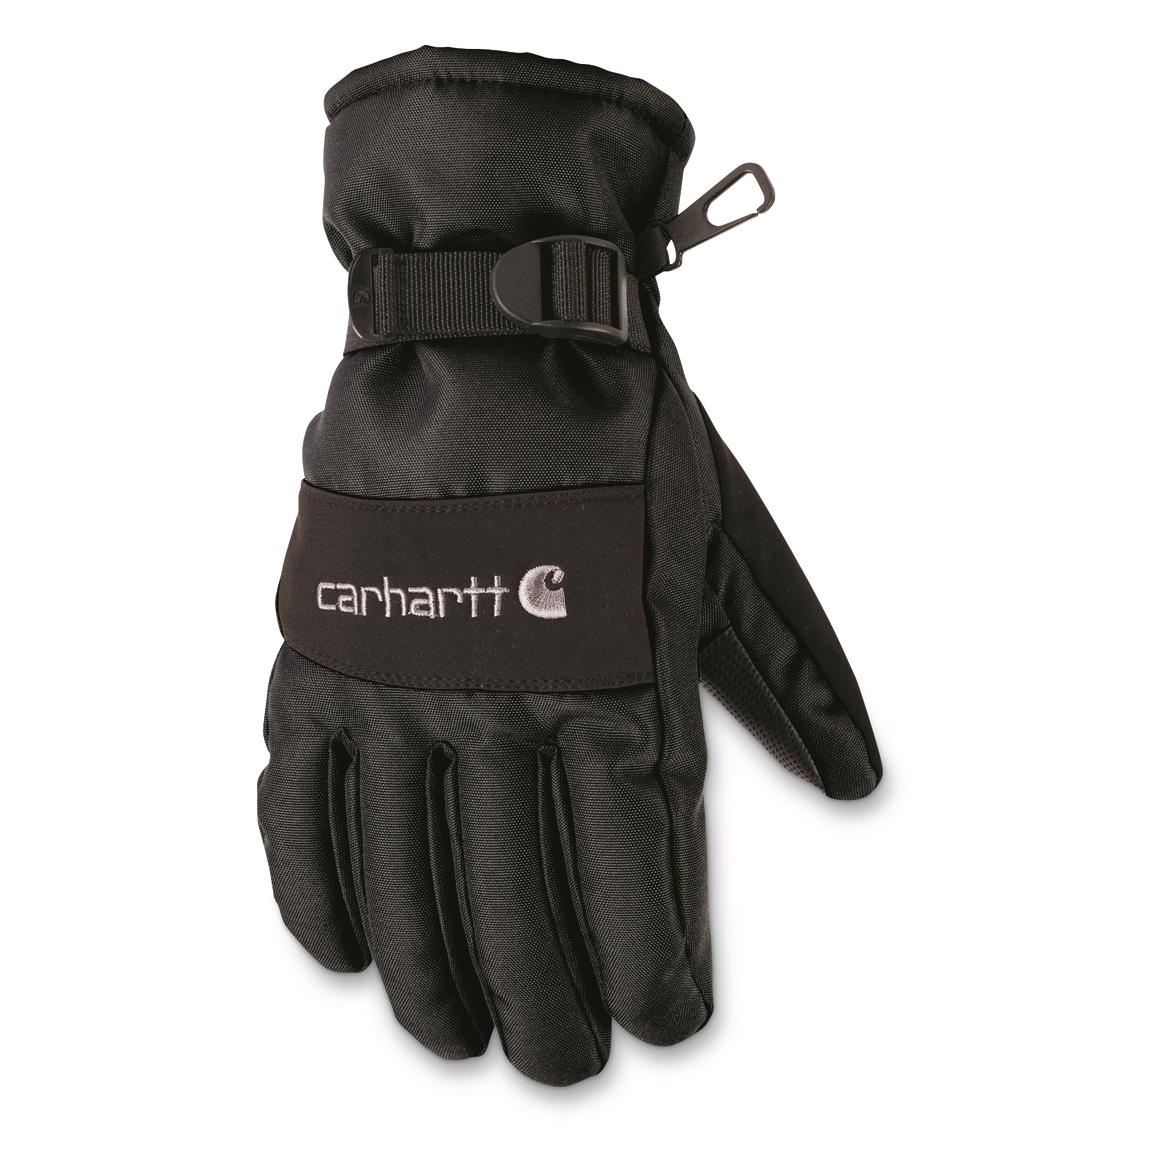 Carhartt WP Waterproof Insulated Gloves, Black